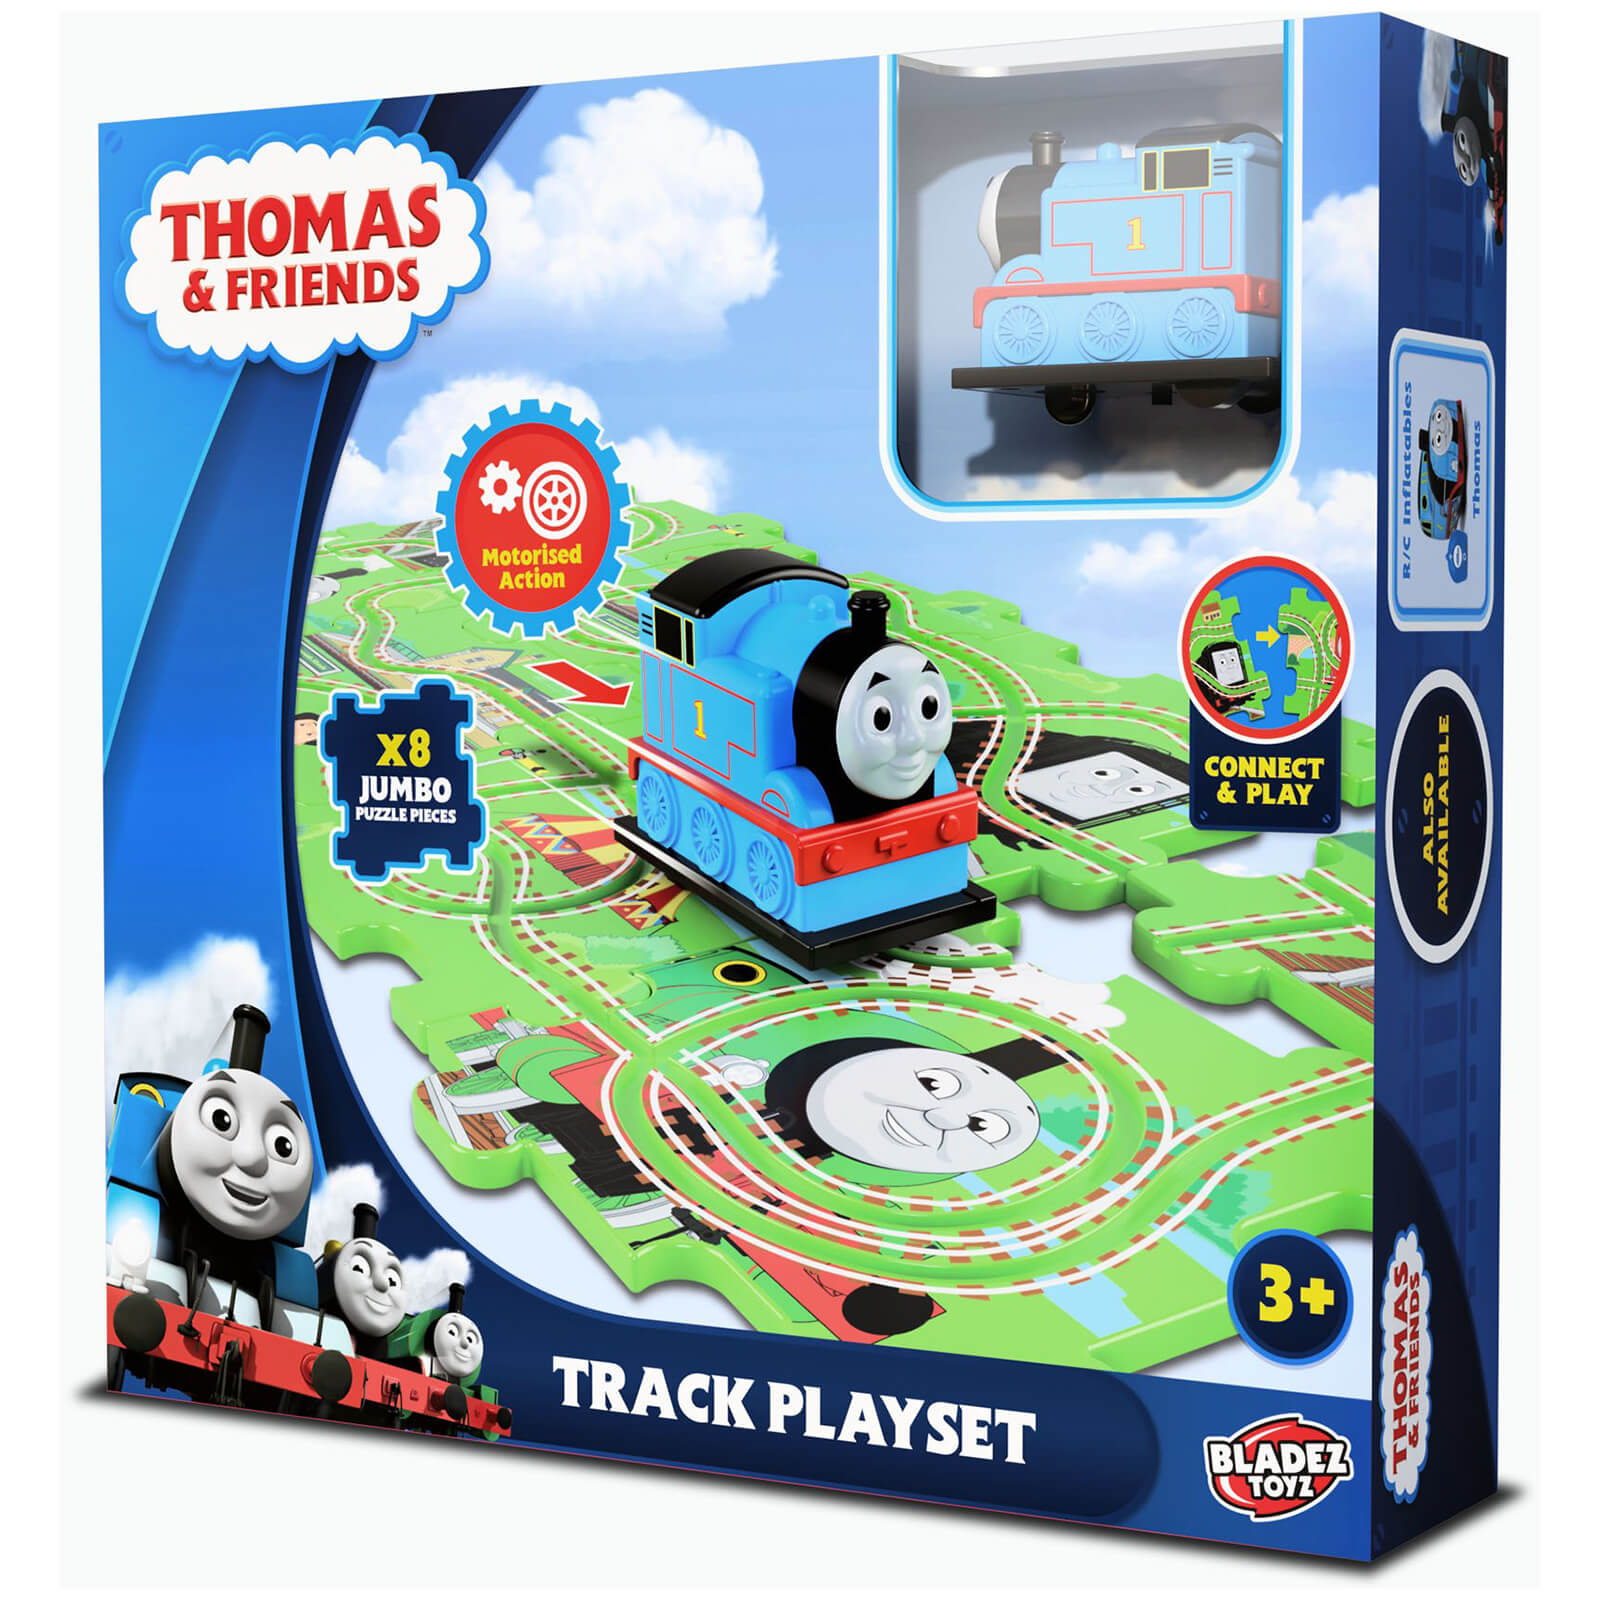 Thomas & Friends Tile Playset